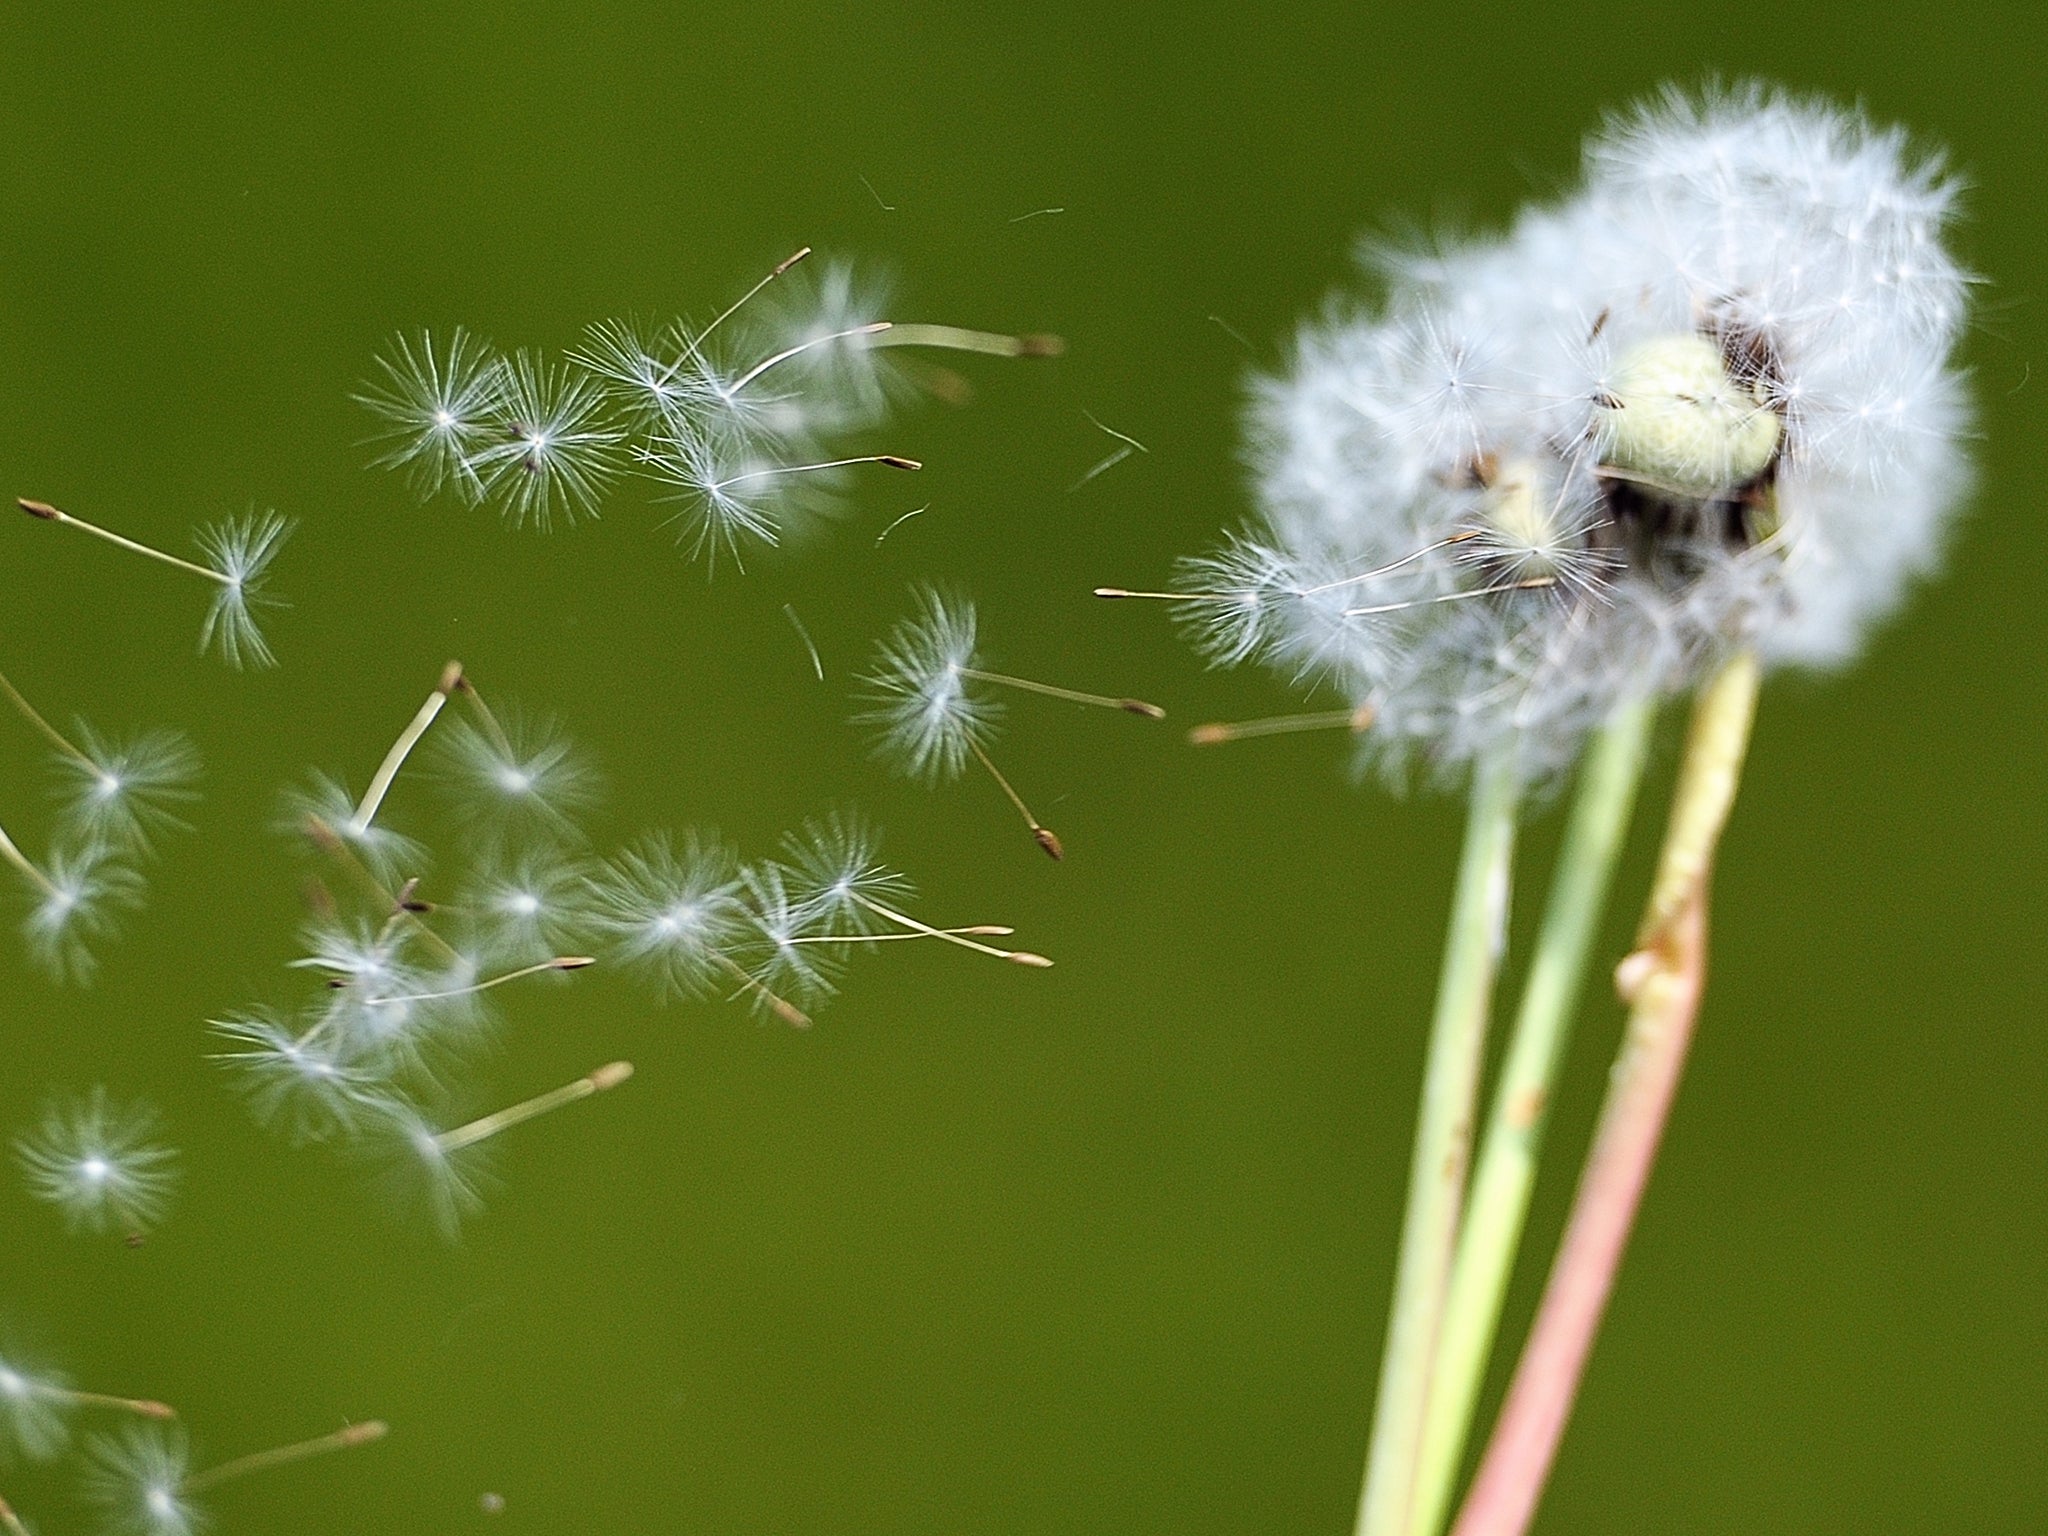 Dandelion seeds blow in the wind in Godewaersvelde, northern France